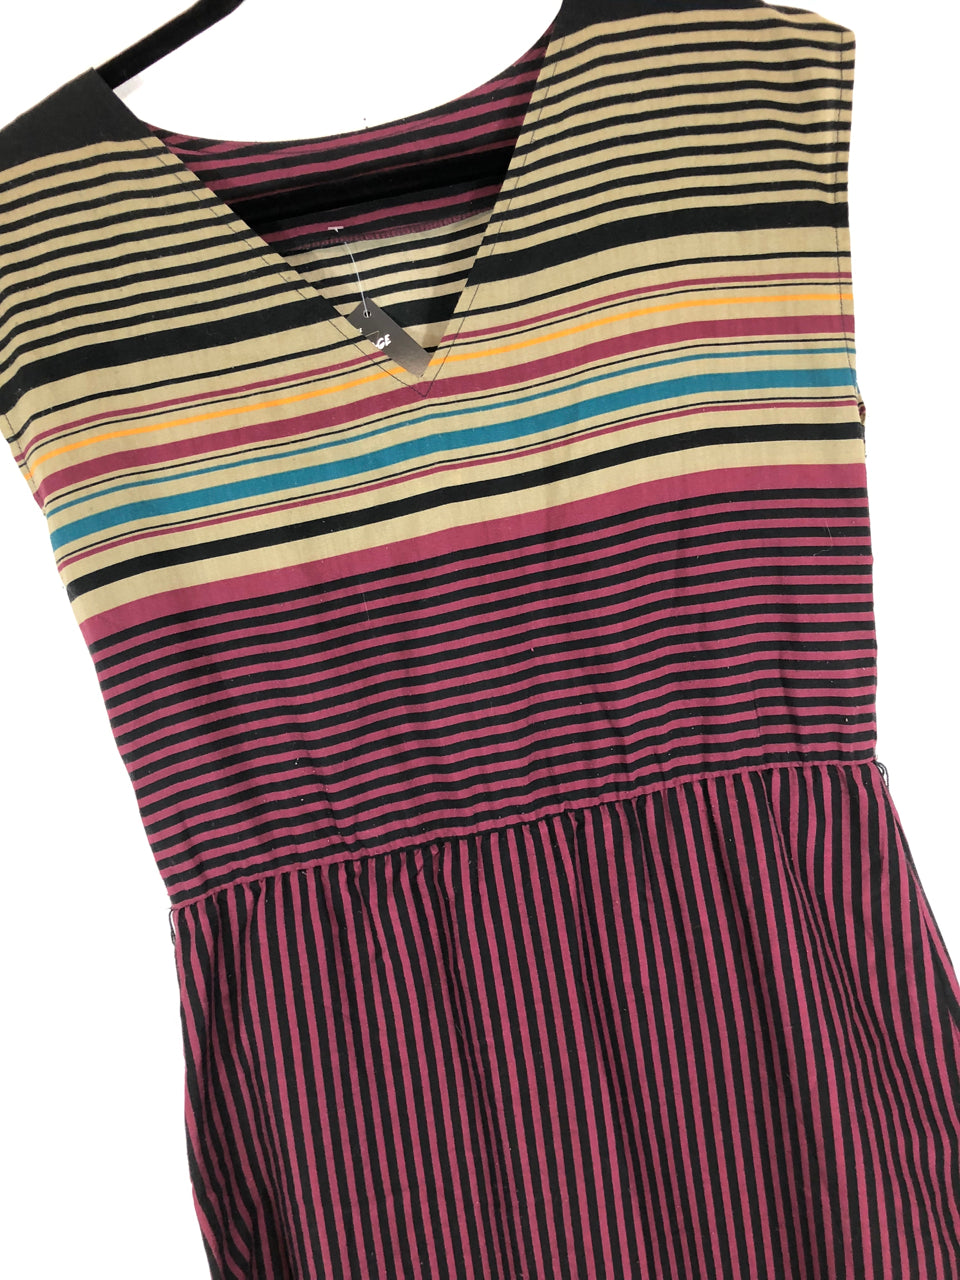 Striped 80s Dress